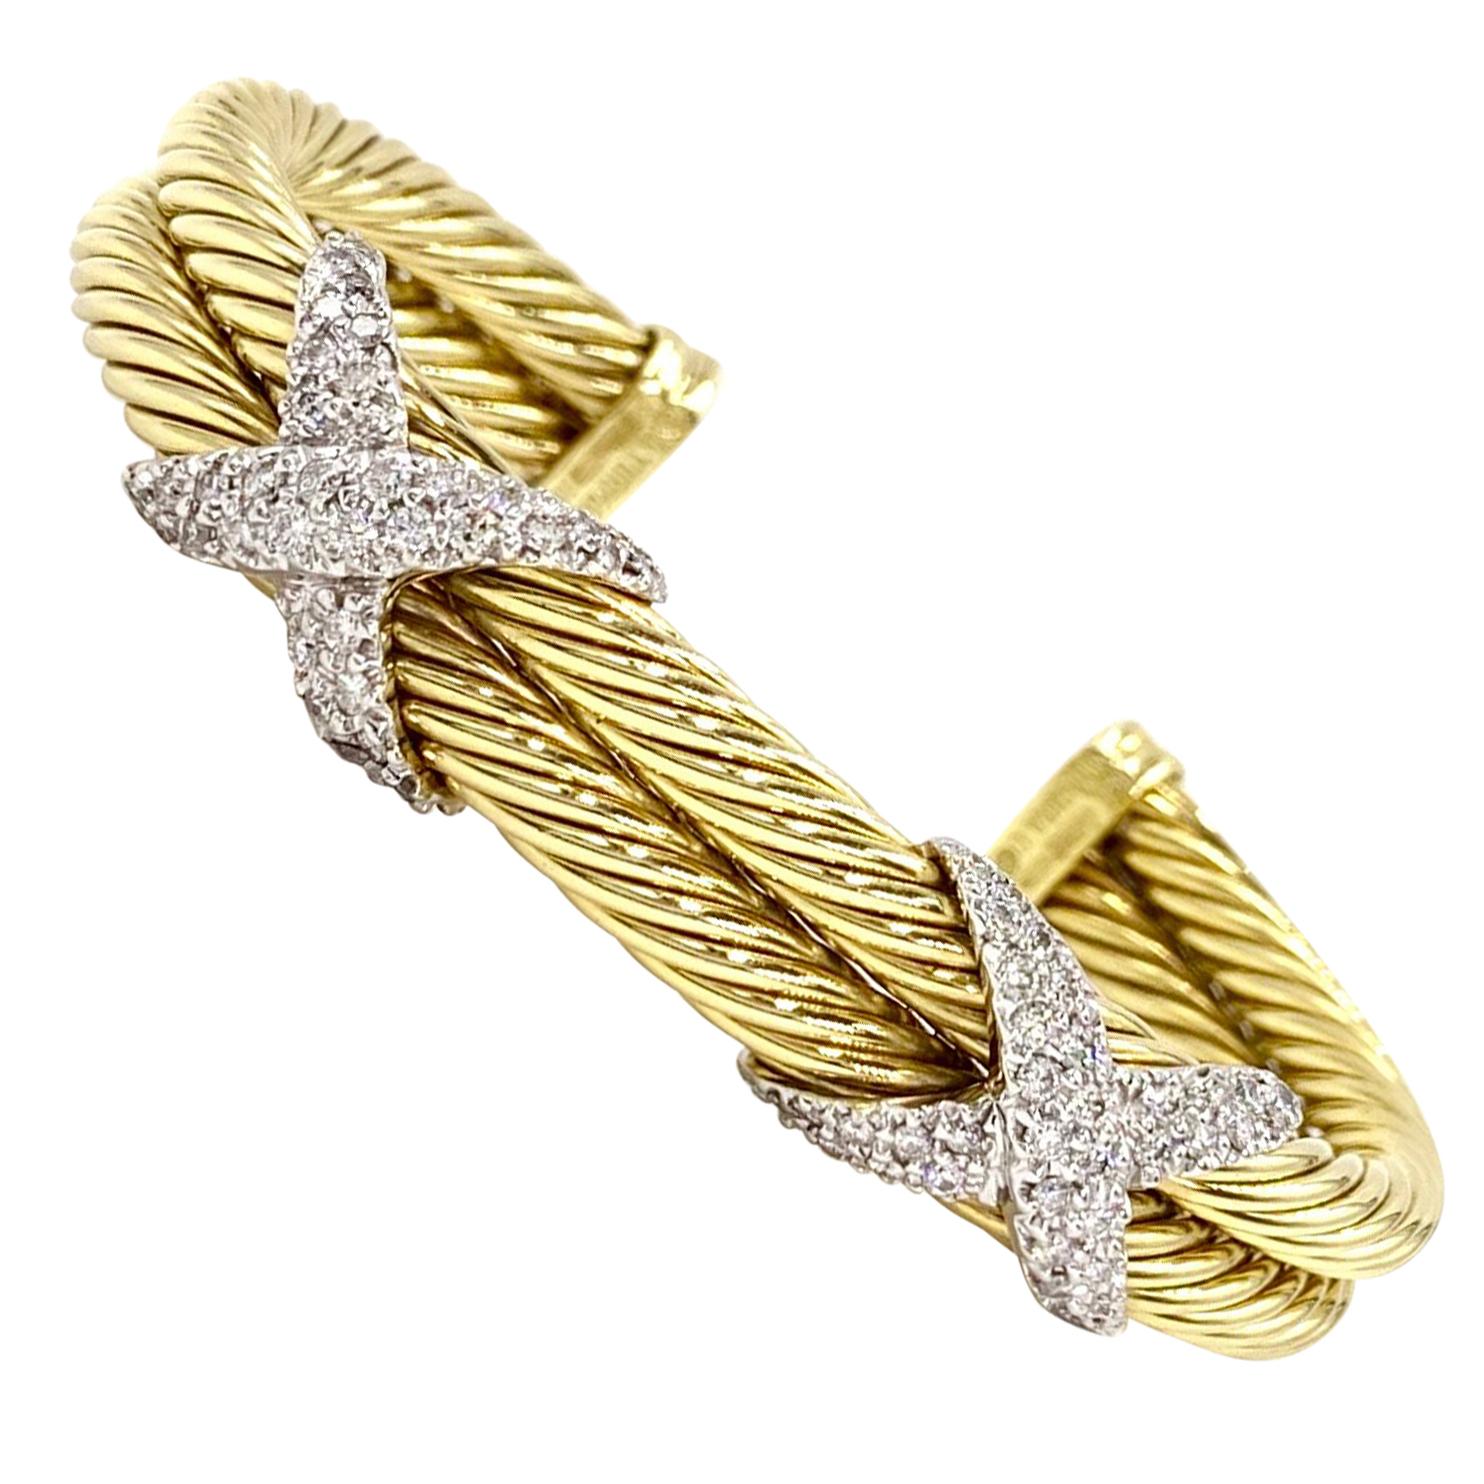 David Yurman 18 Karat Yellow Gold and Diamond Cable Cuff Bracelet For Sale